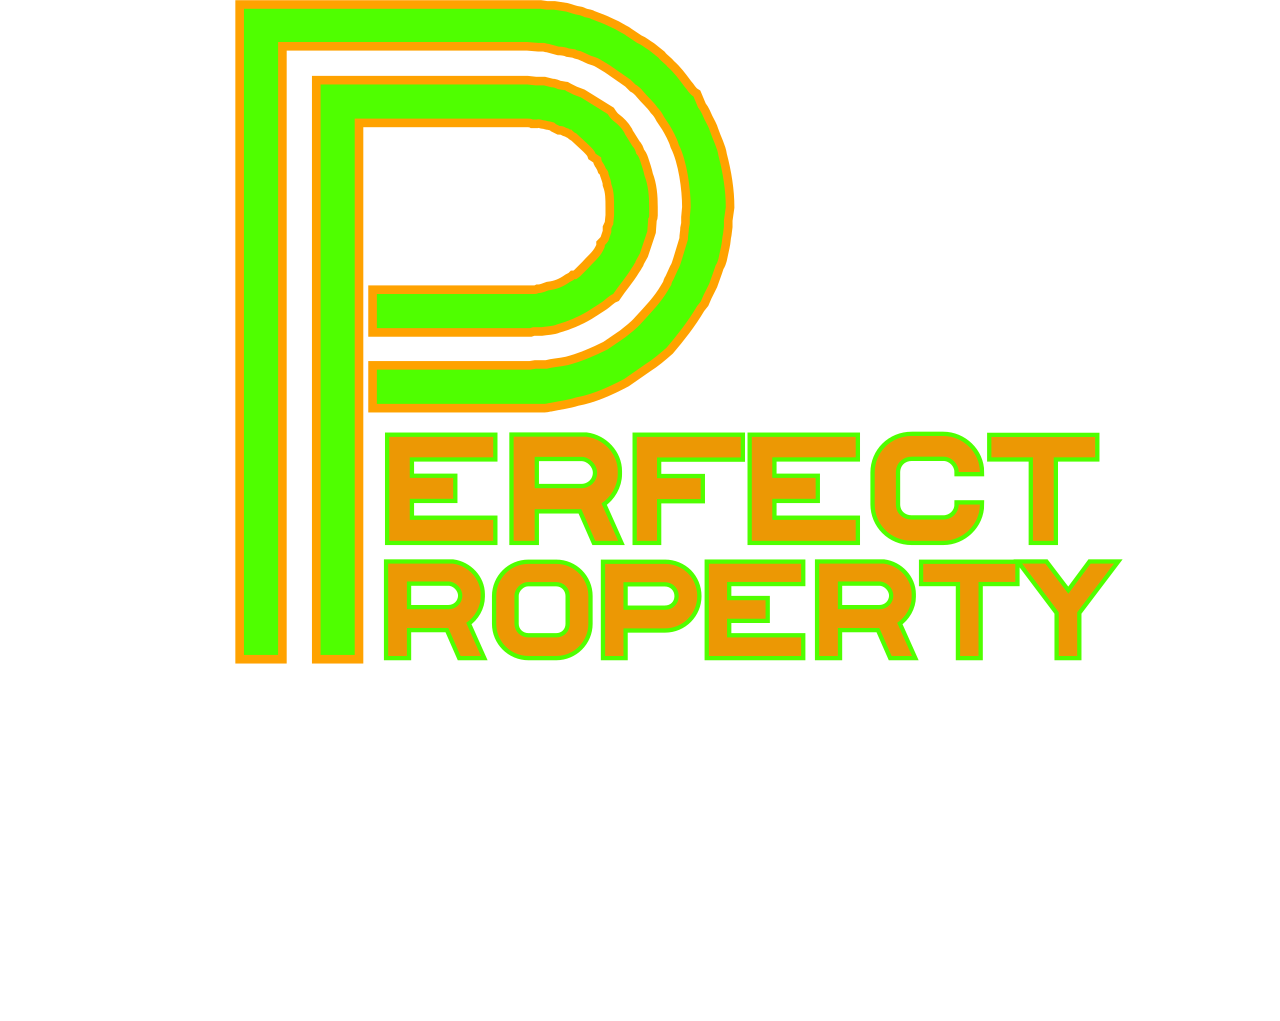 & Landscaping, LLC's logo